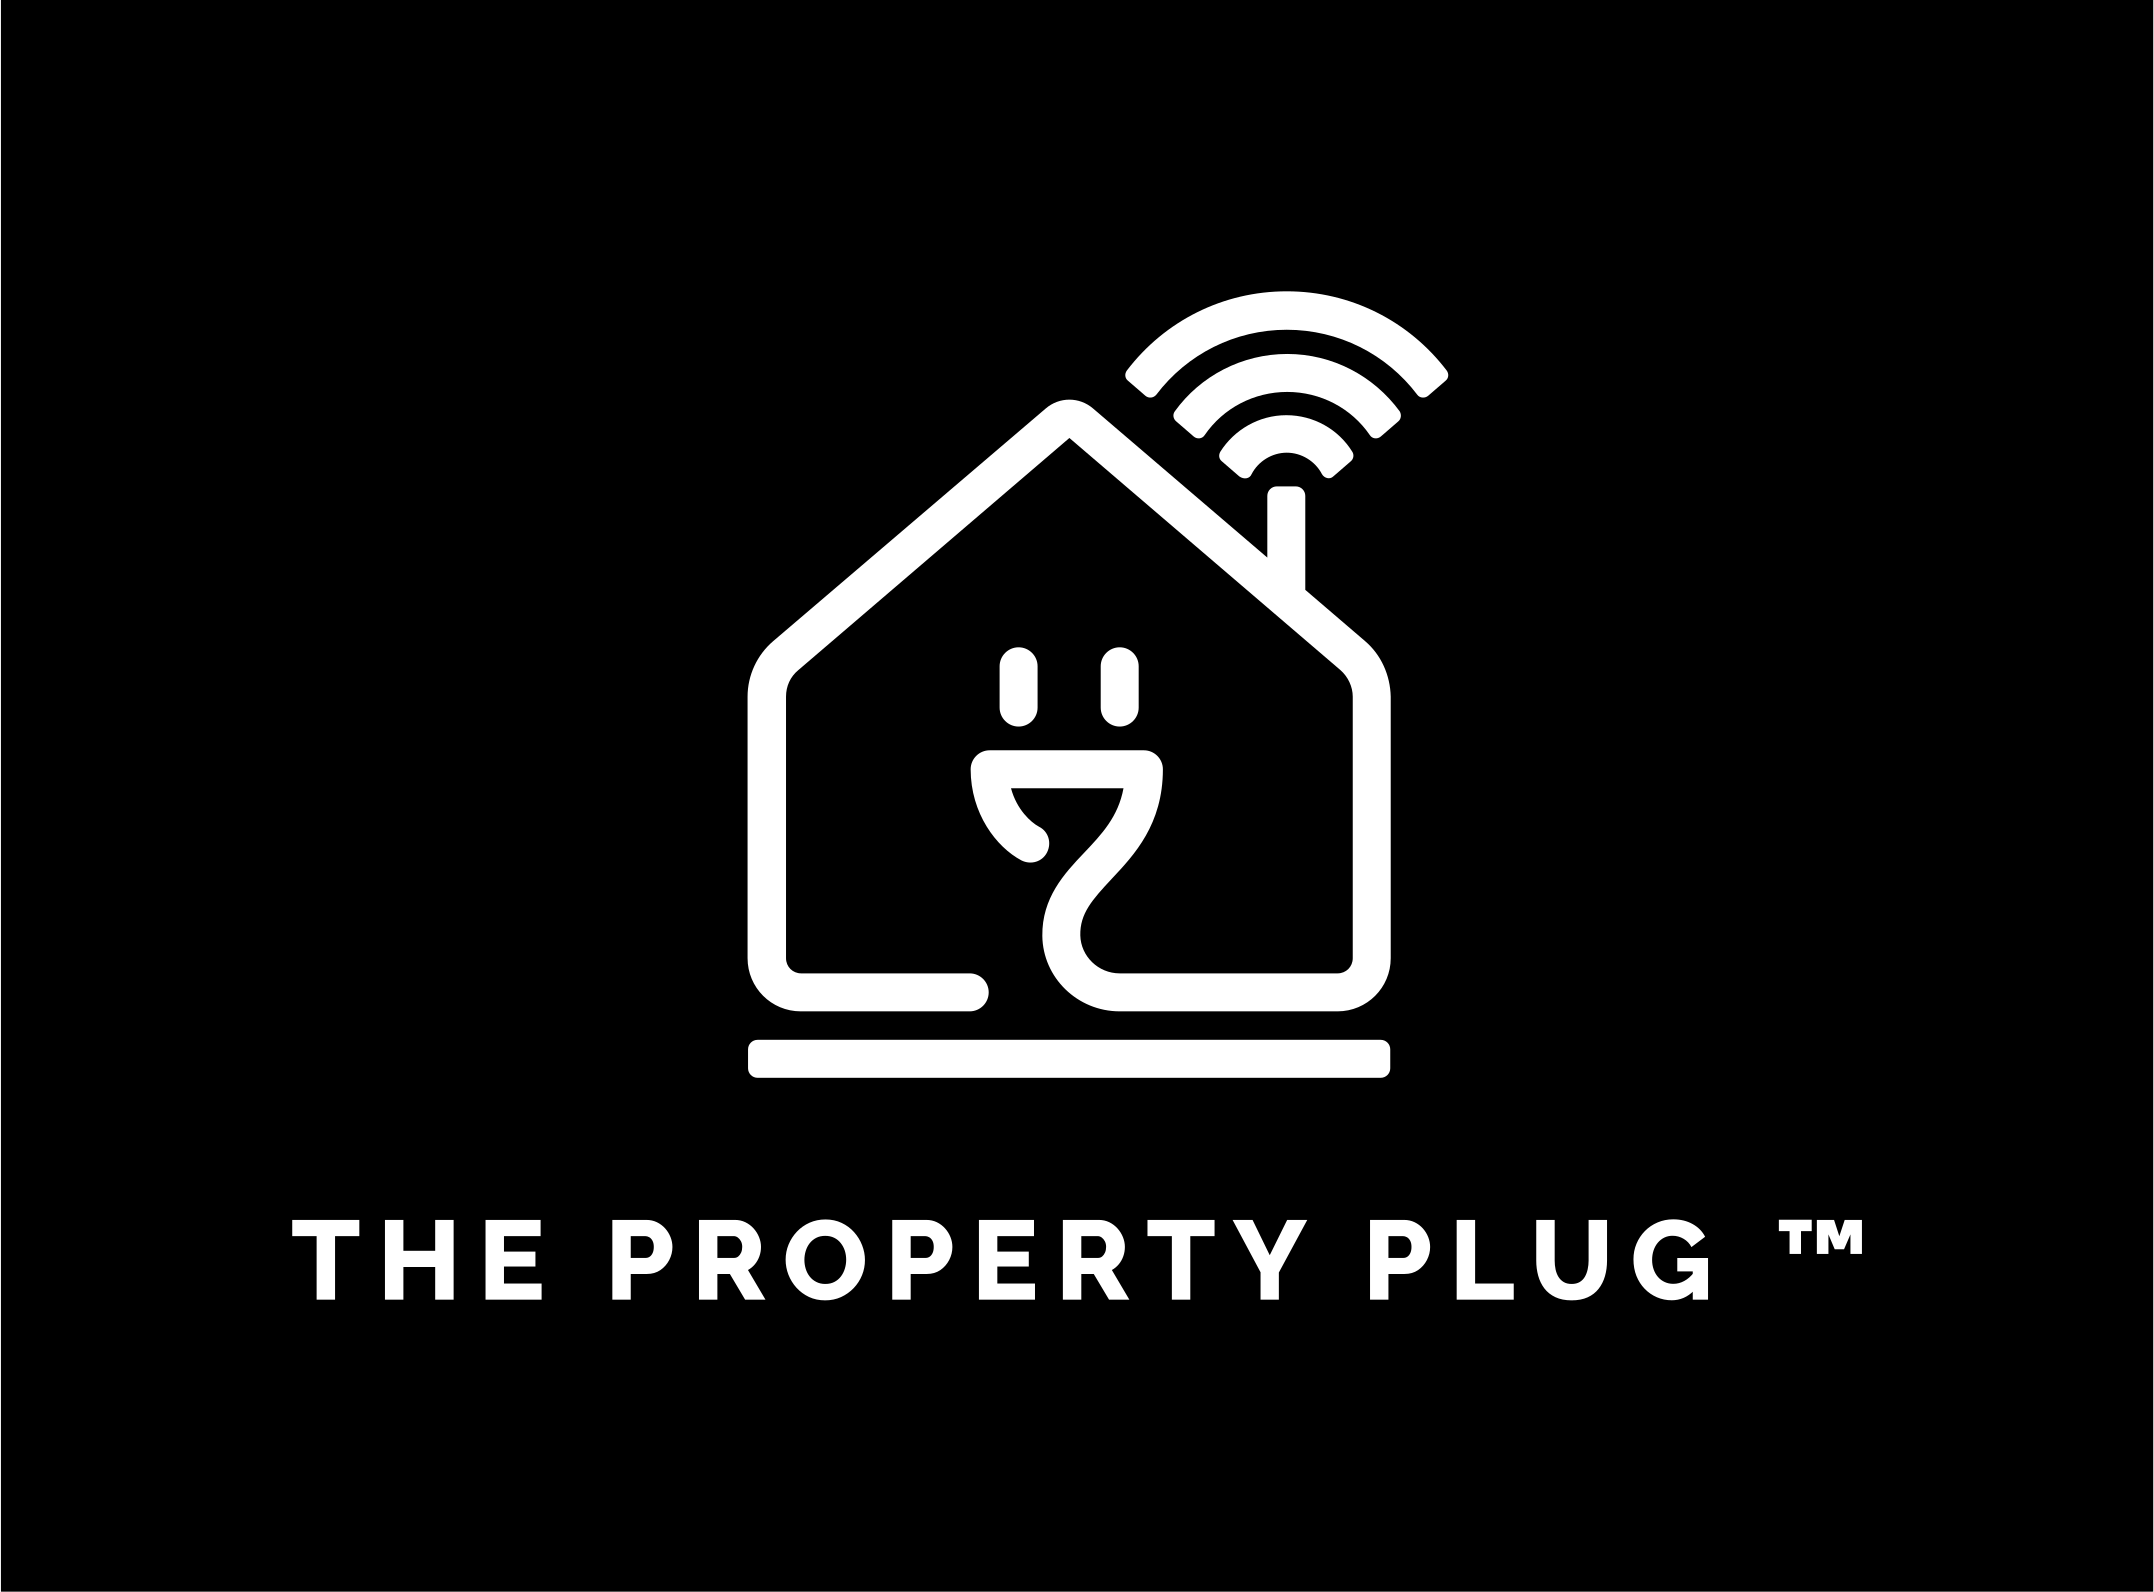 The Property Plug™ logo